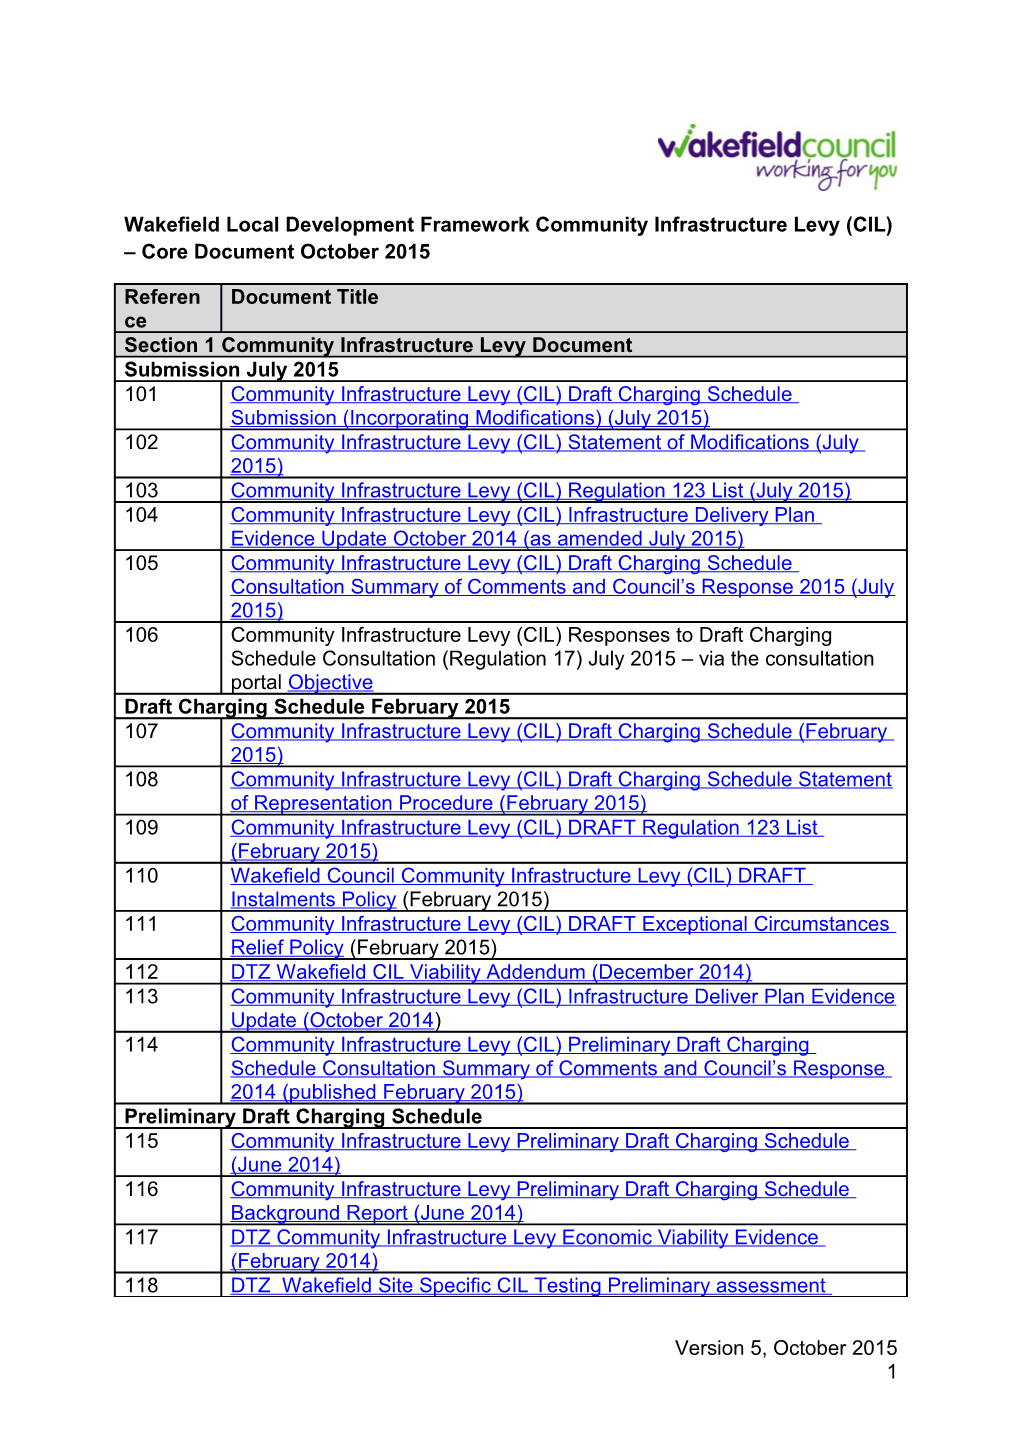 Community Infrastructure Levy Core Document List